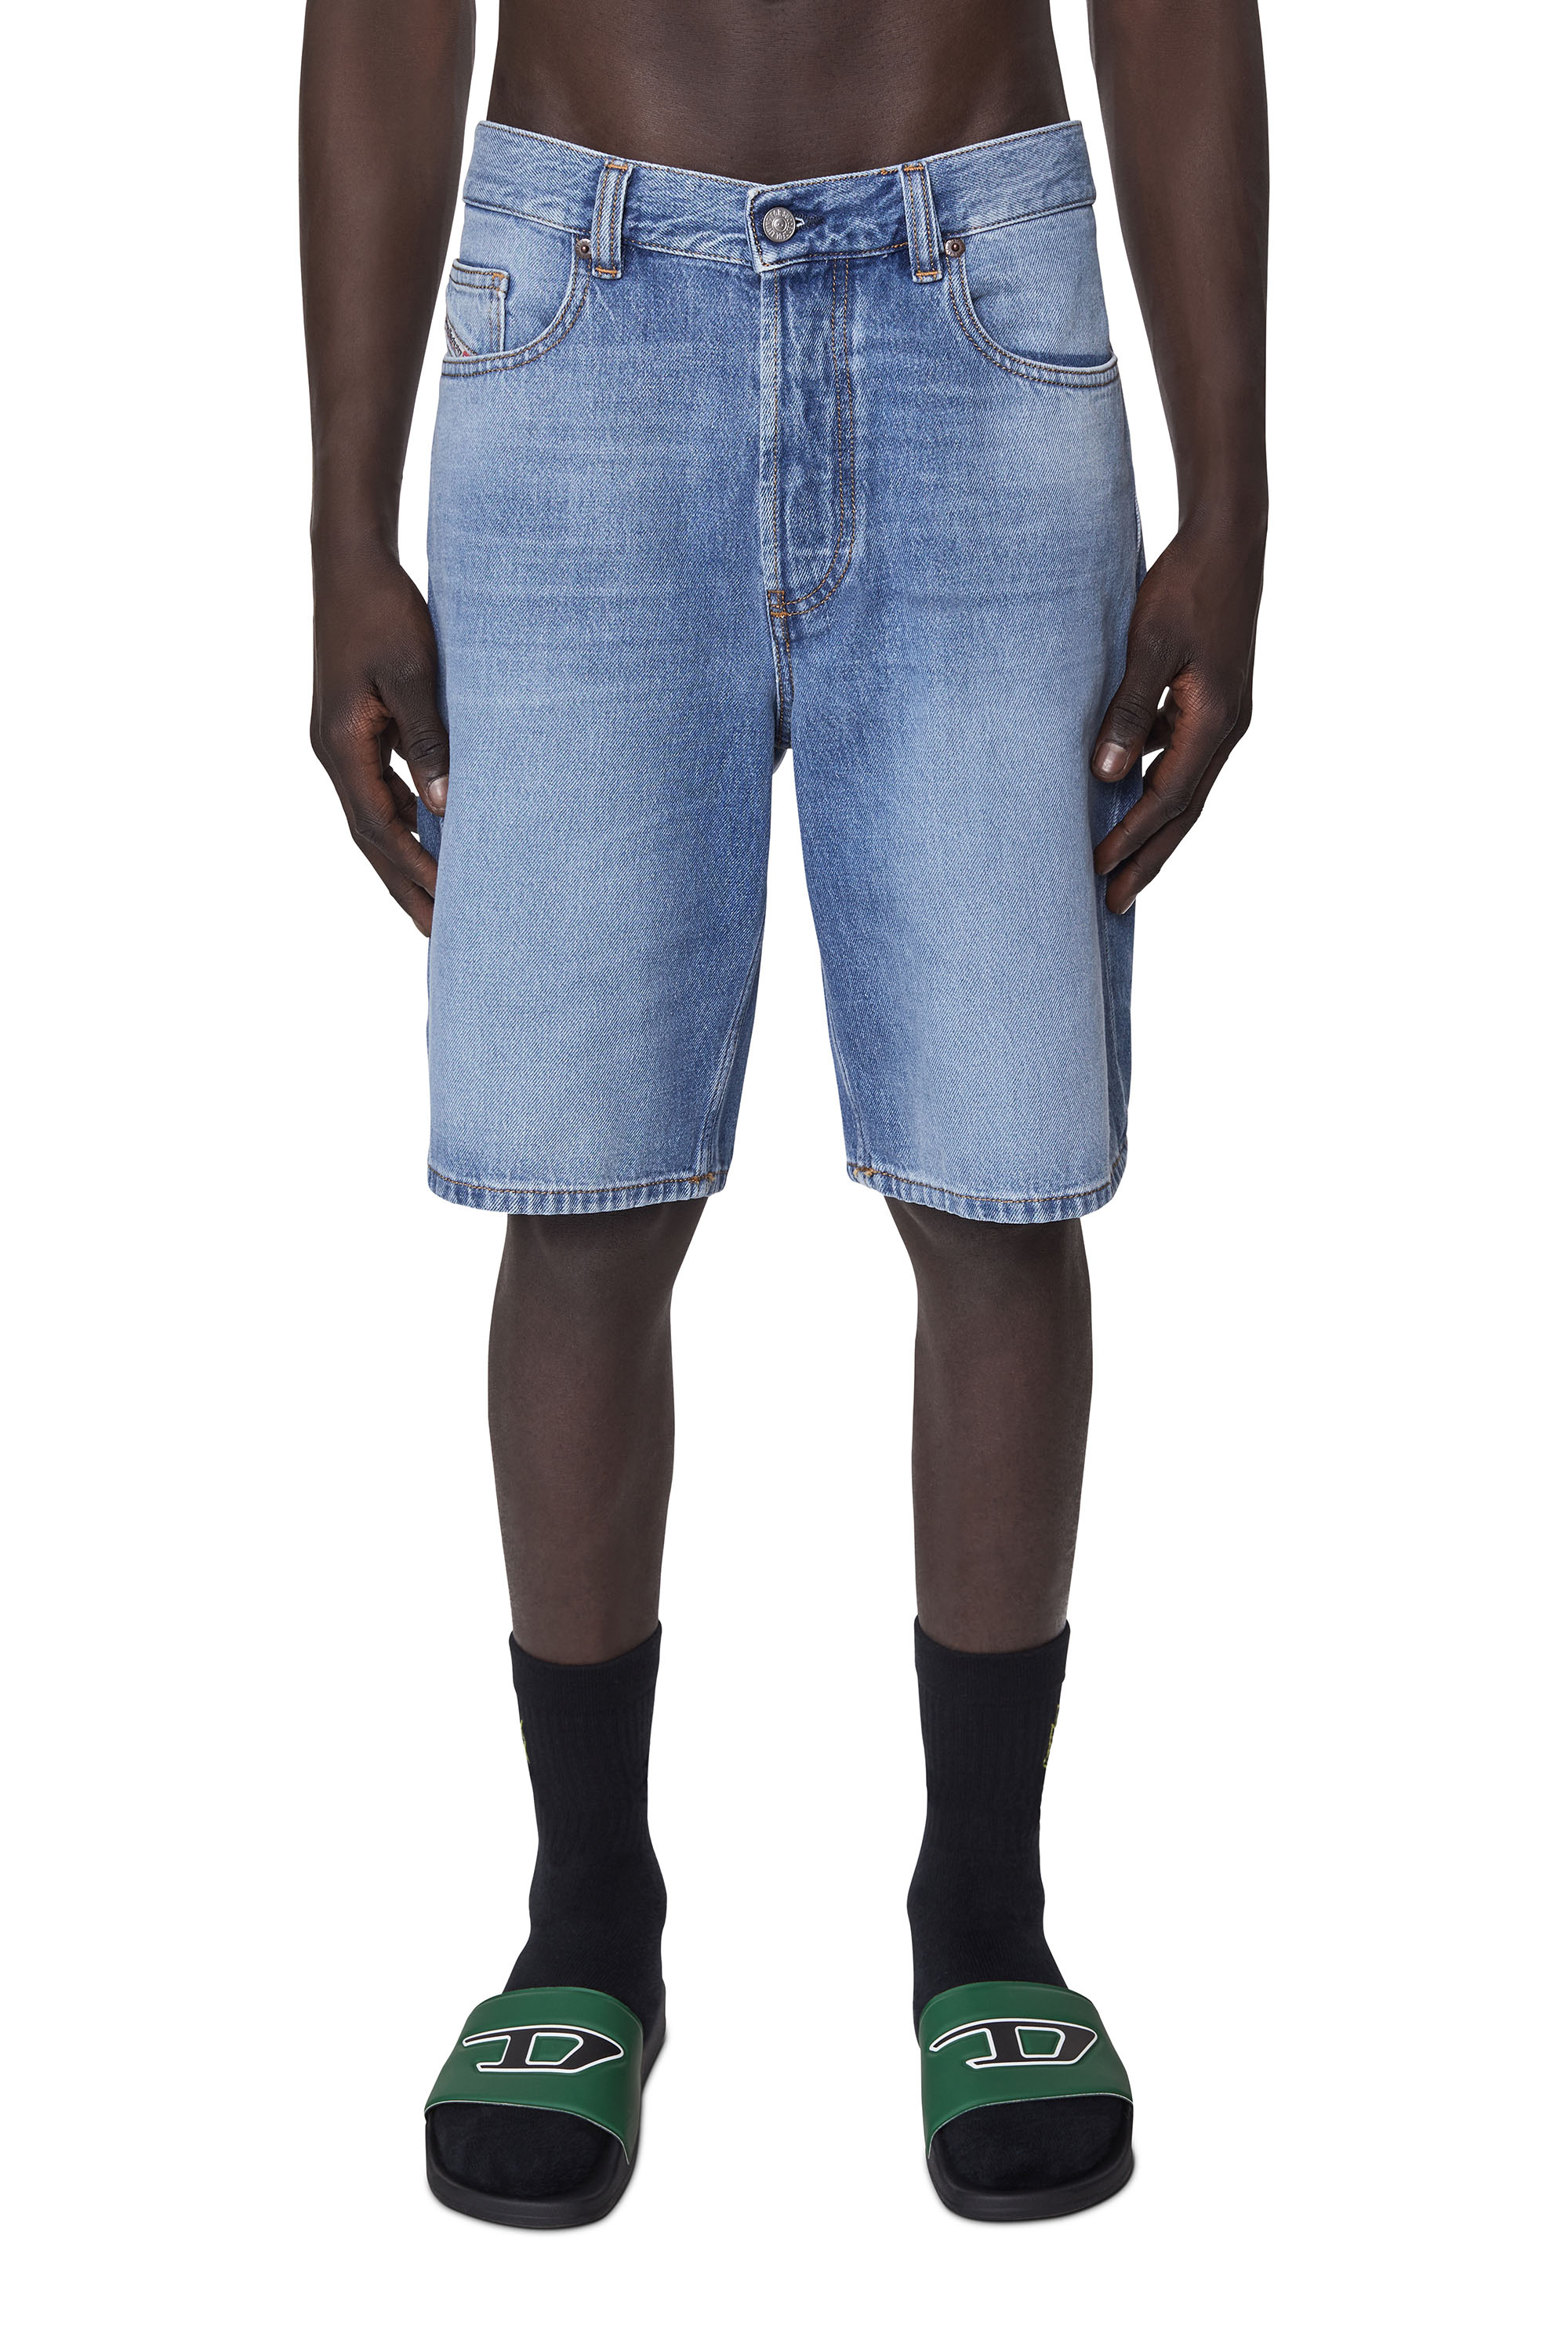 Circular Infidelity Borrow Men's Shorts: Denim, Chino, Sweat | Shop on Diesel.com